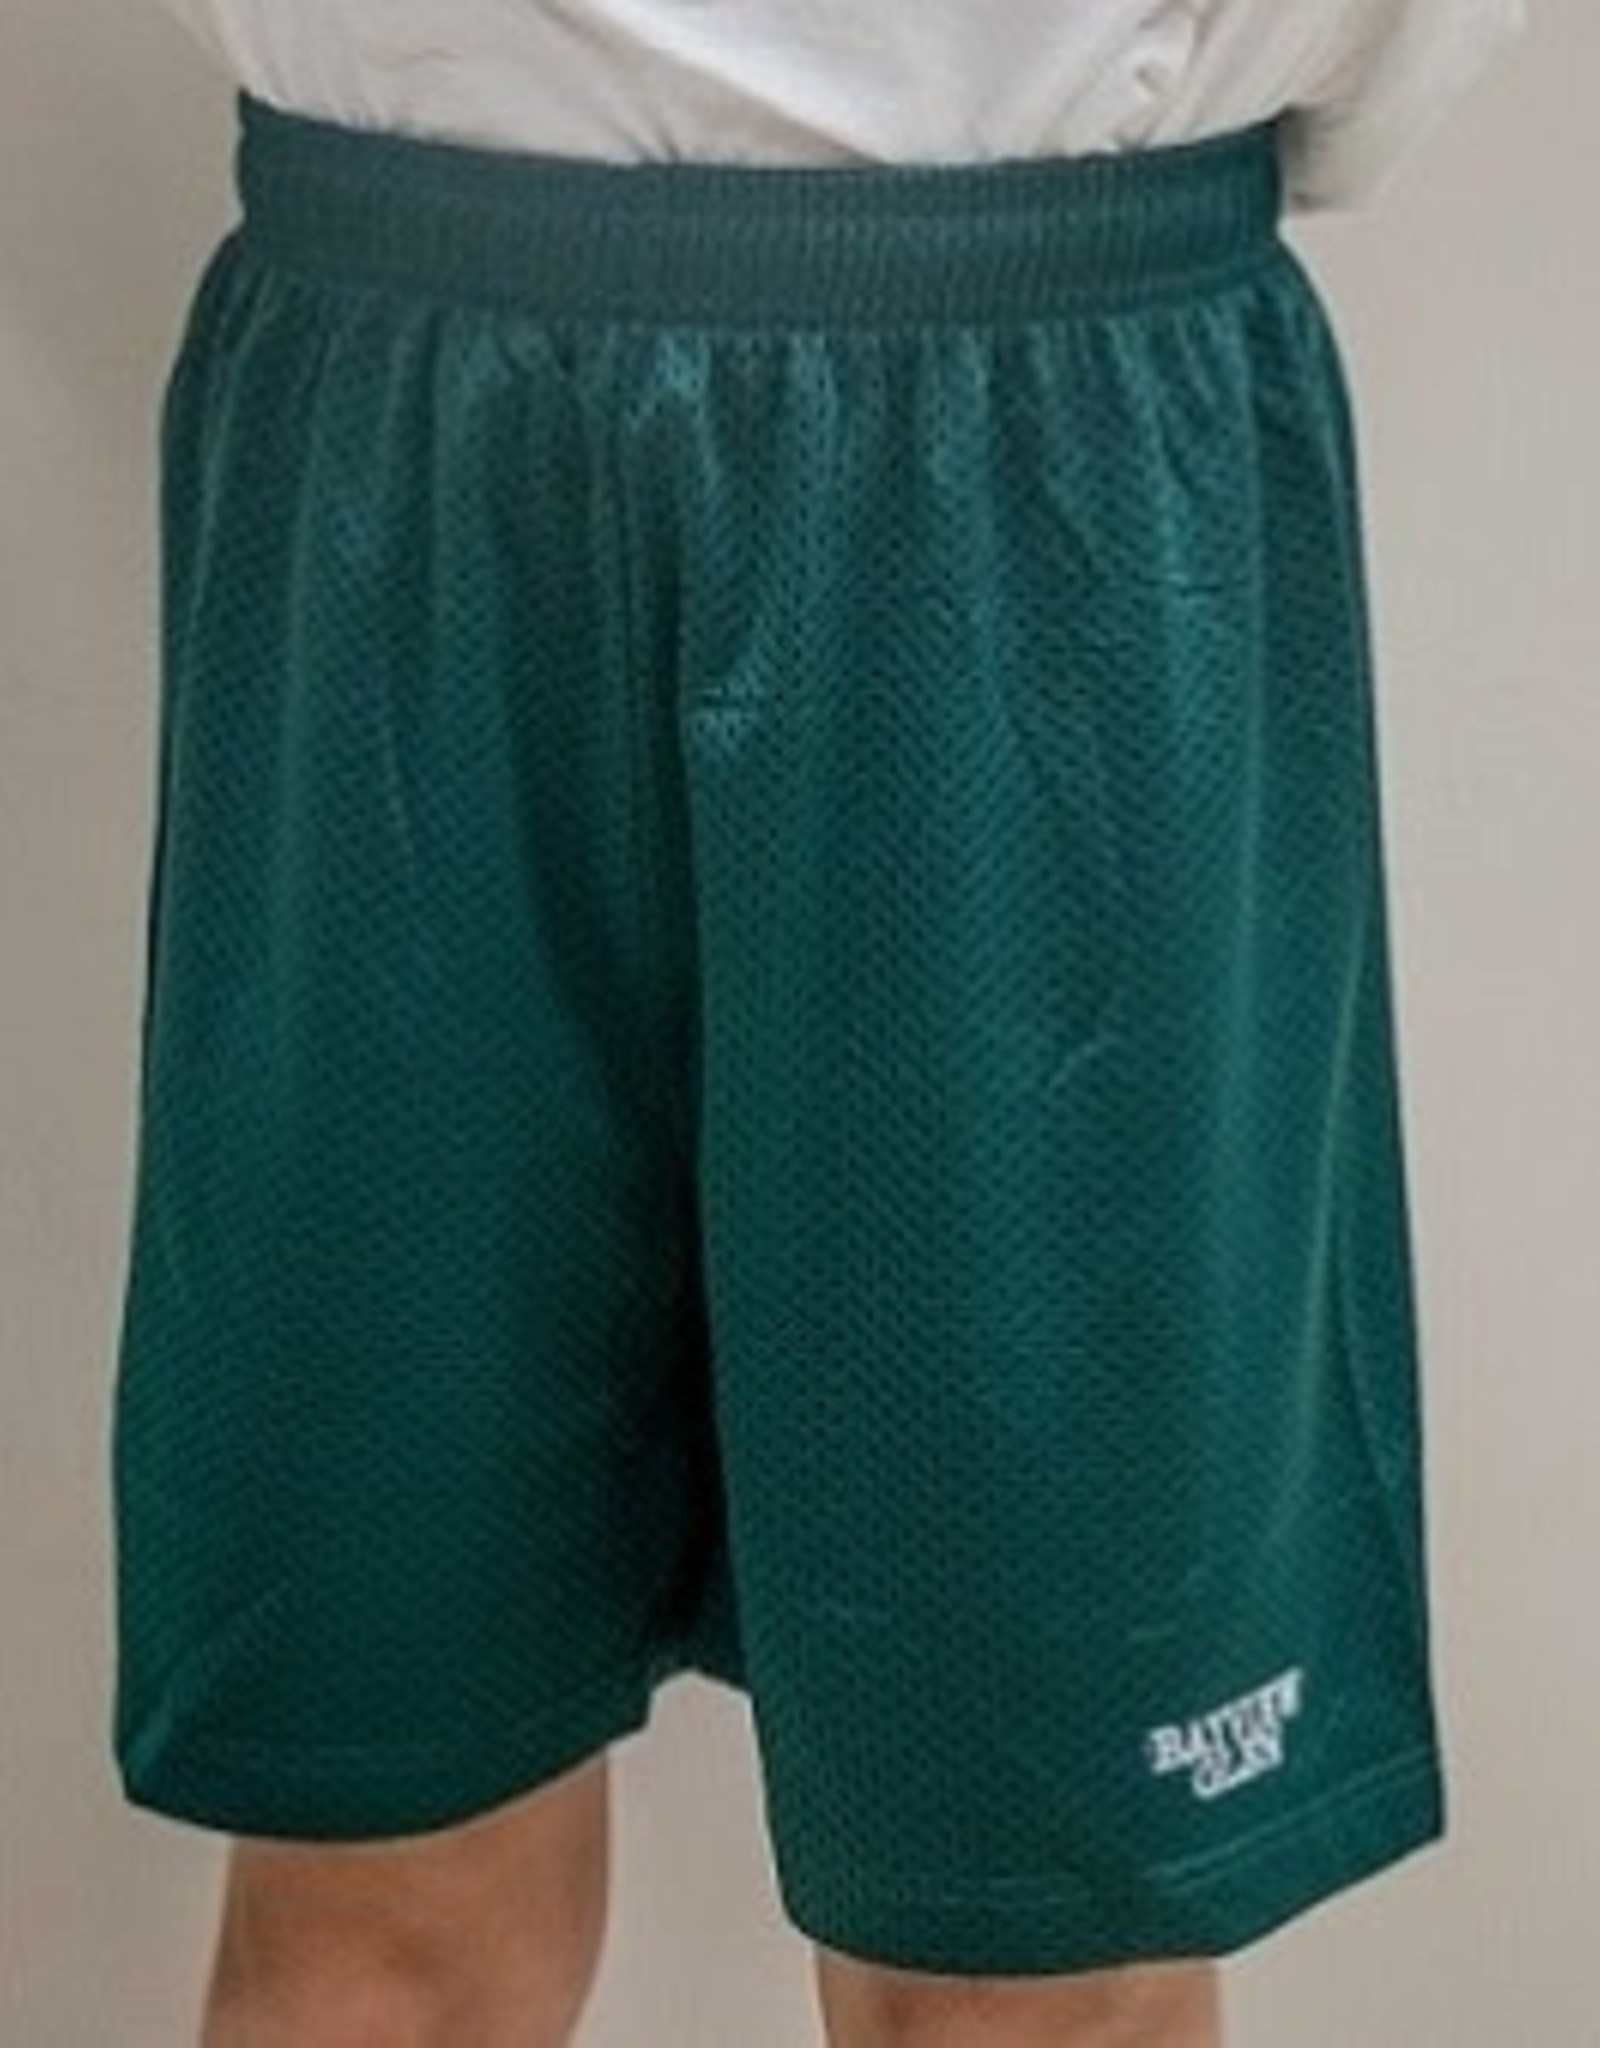 Green Mesh Shorts - Adult